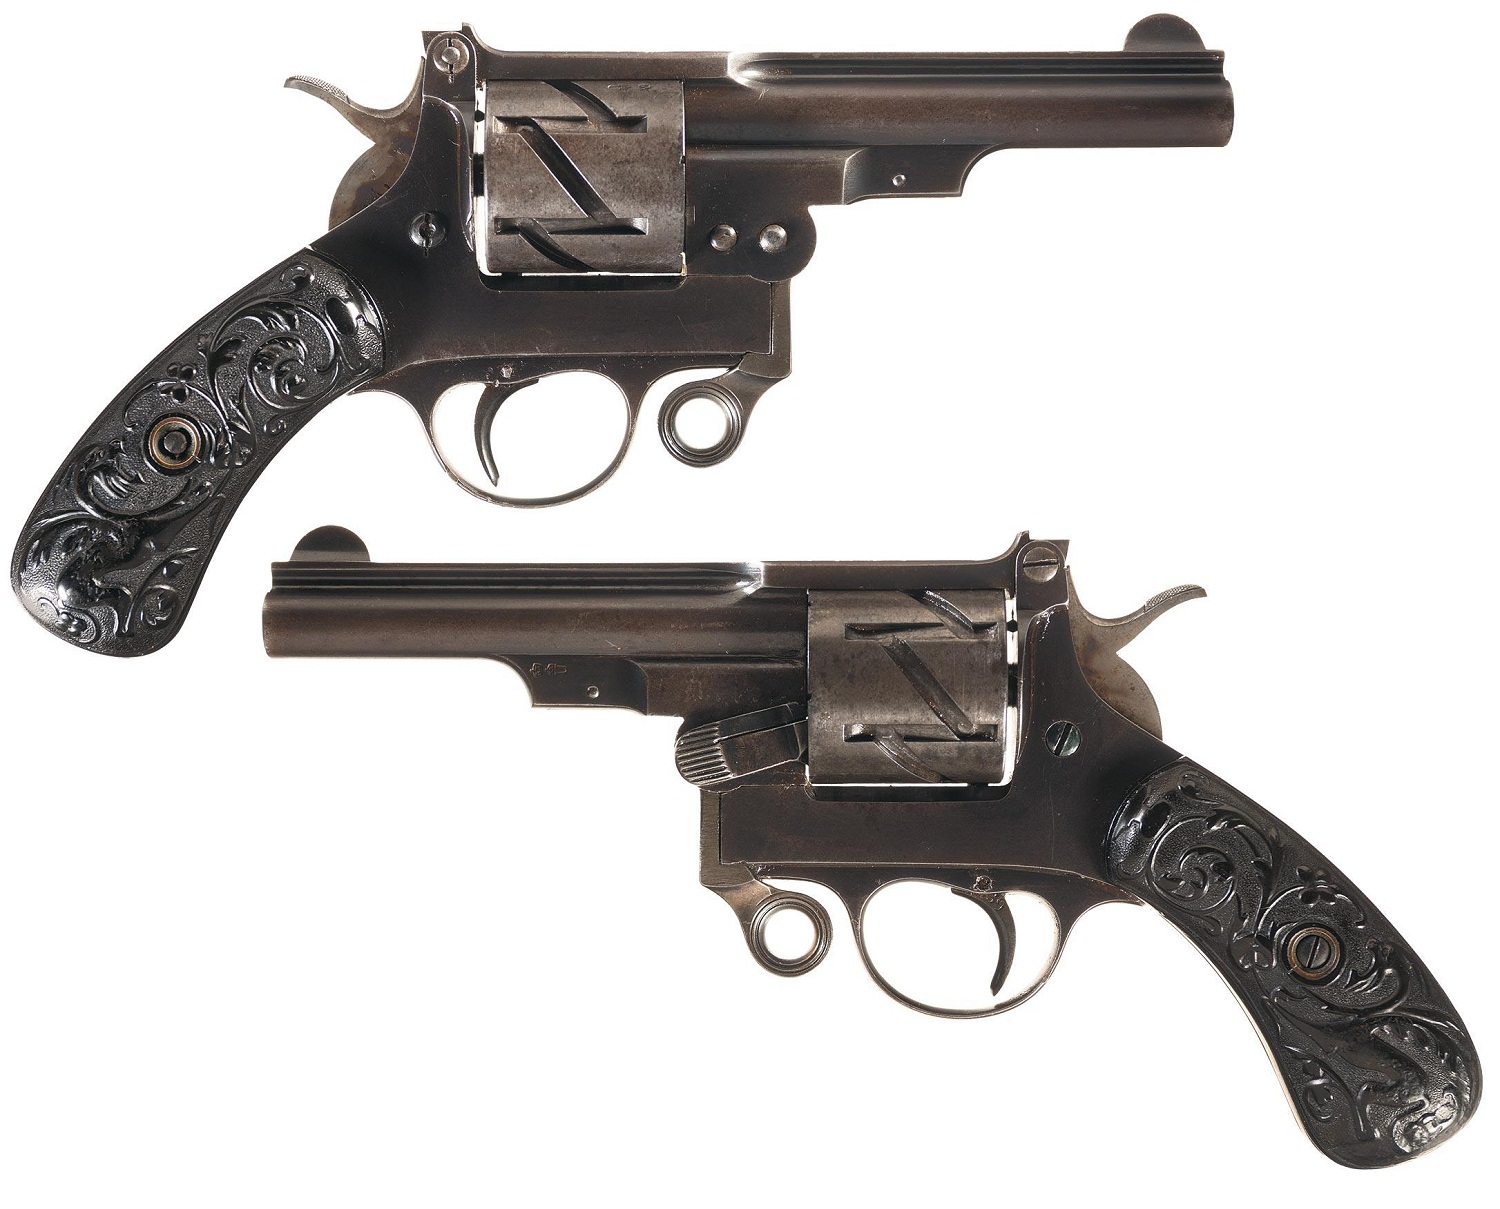 Mauser Model 1878 revolver in 32 caliber